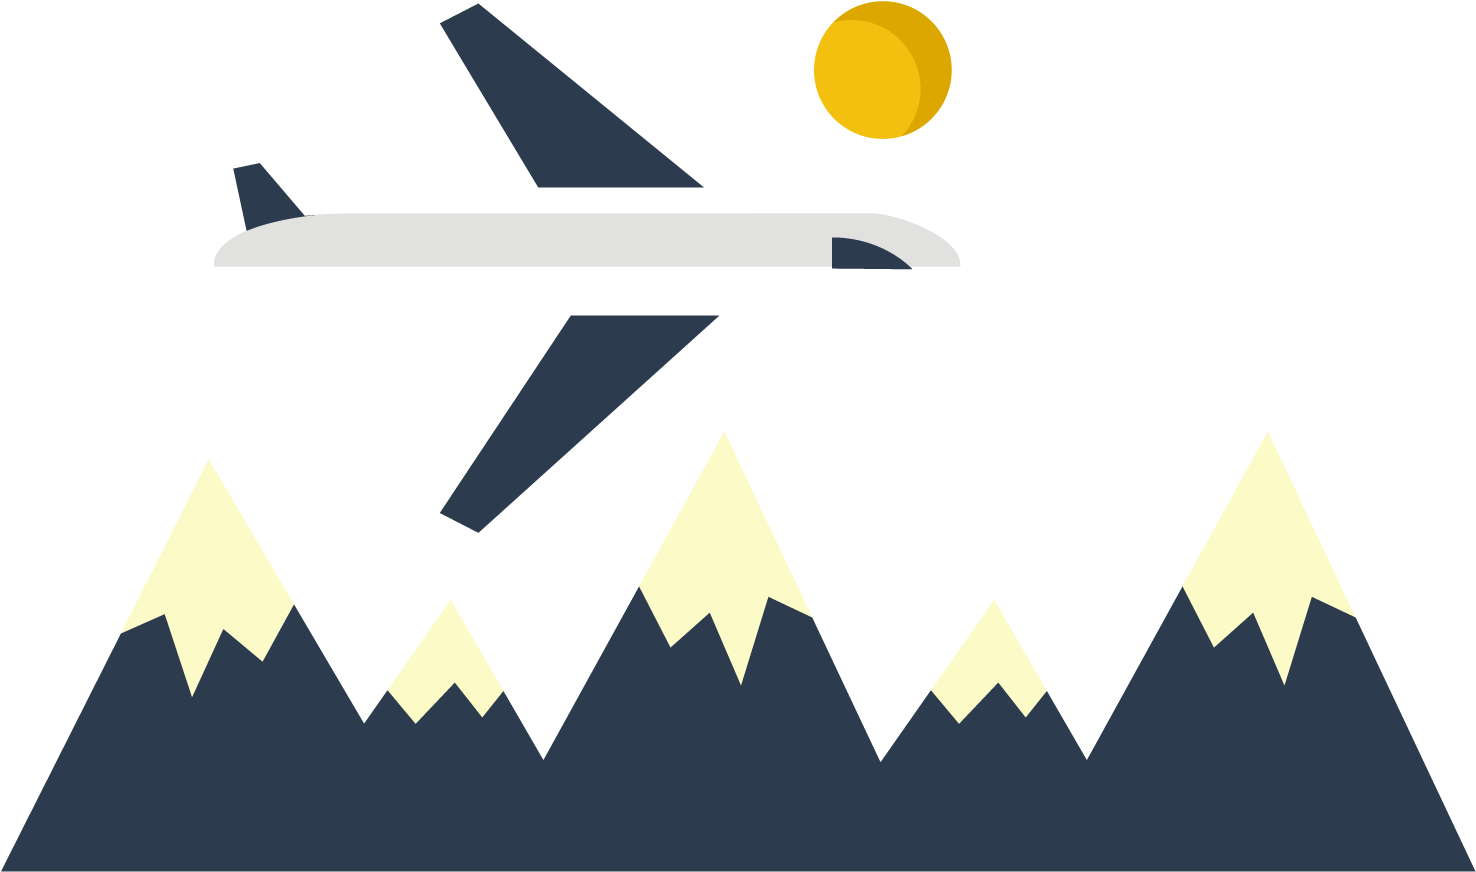 Airplane Flat Design Illustration - Flat Design (1500x1500)